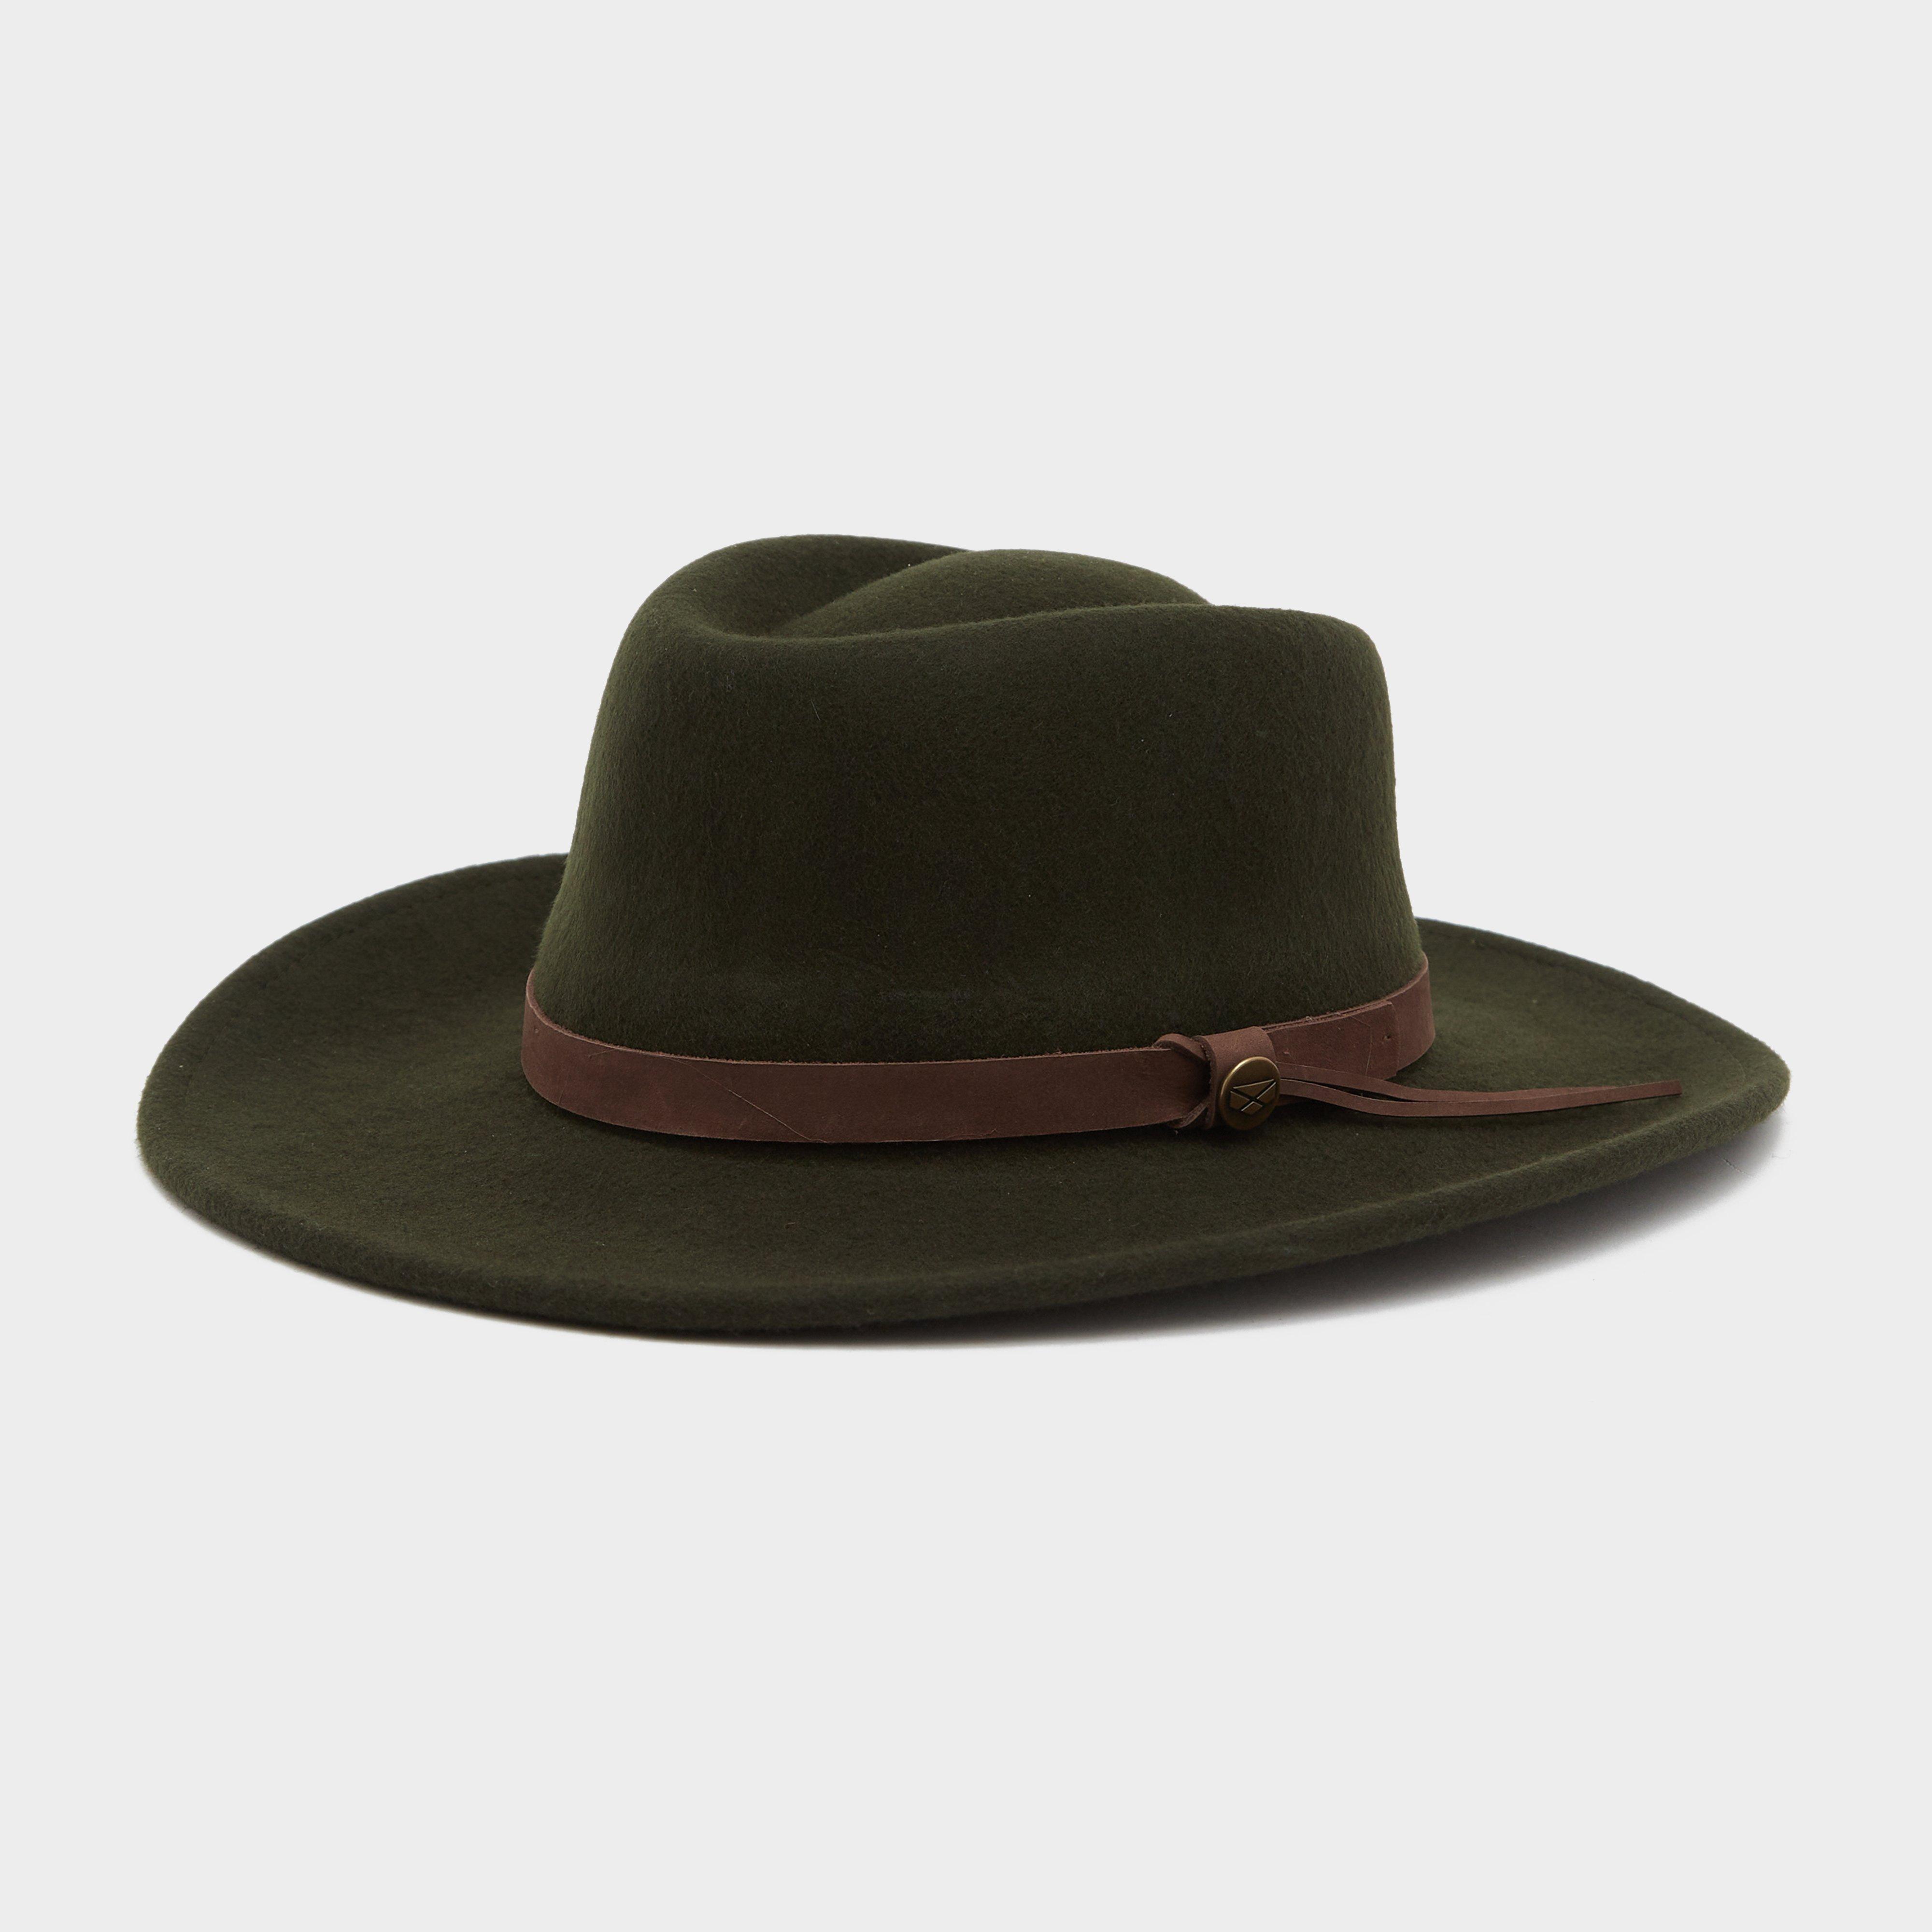  Hoggs of Fife Perth Crushable Felt Hat, Green